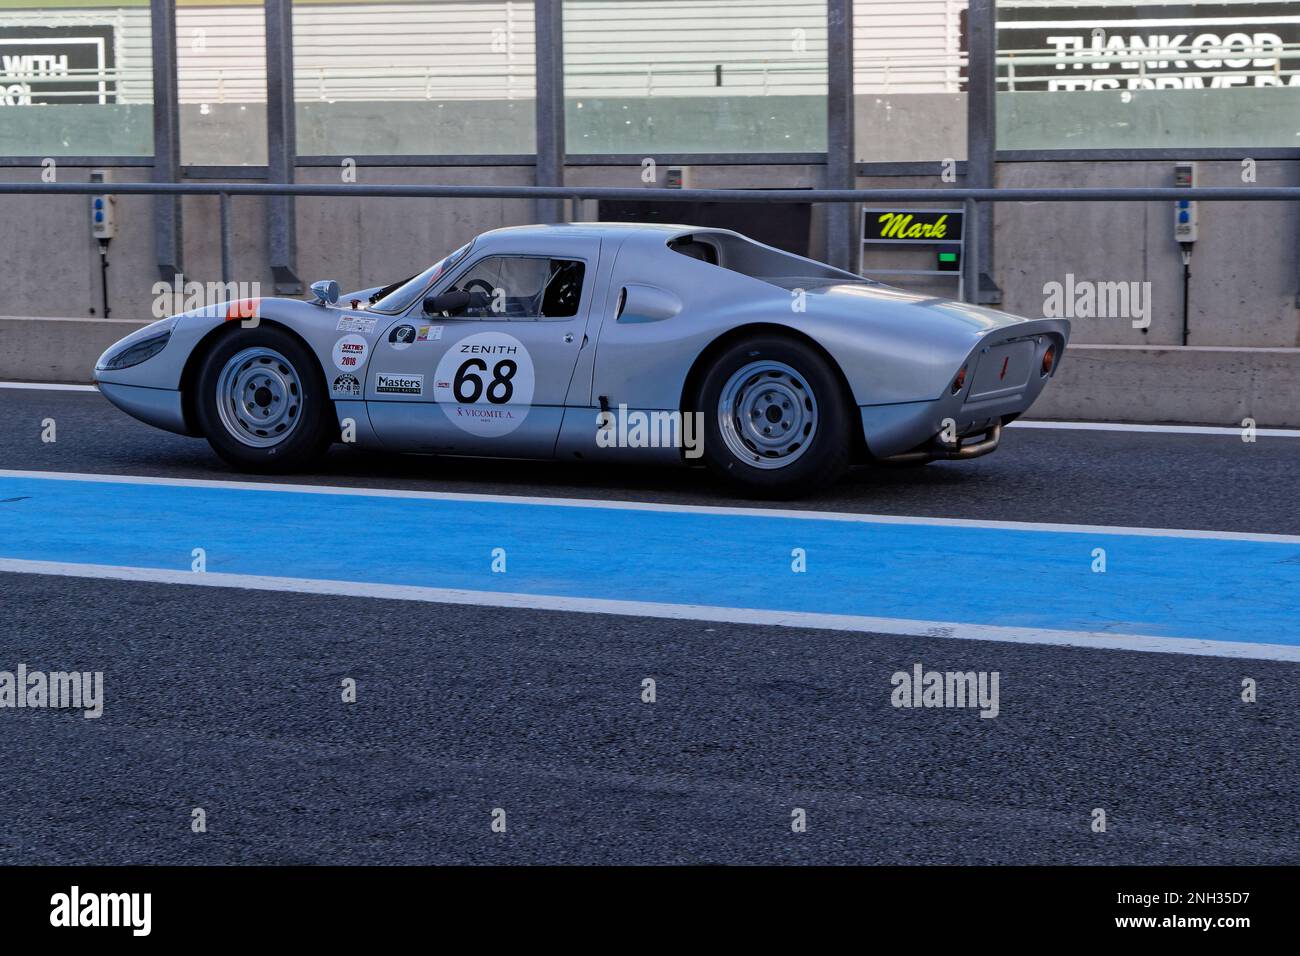 Burgundy racing car hi-res stock photography and images - Alamy